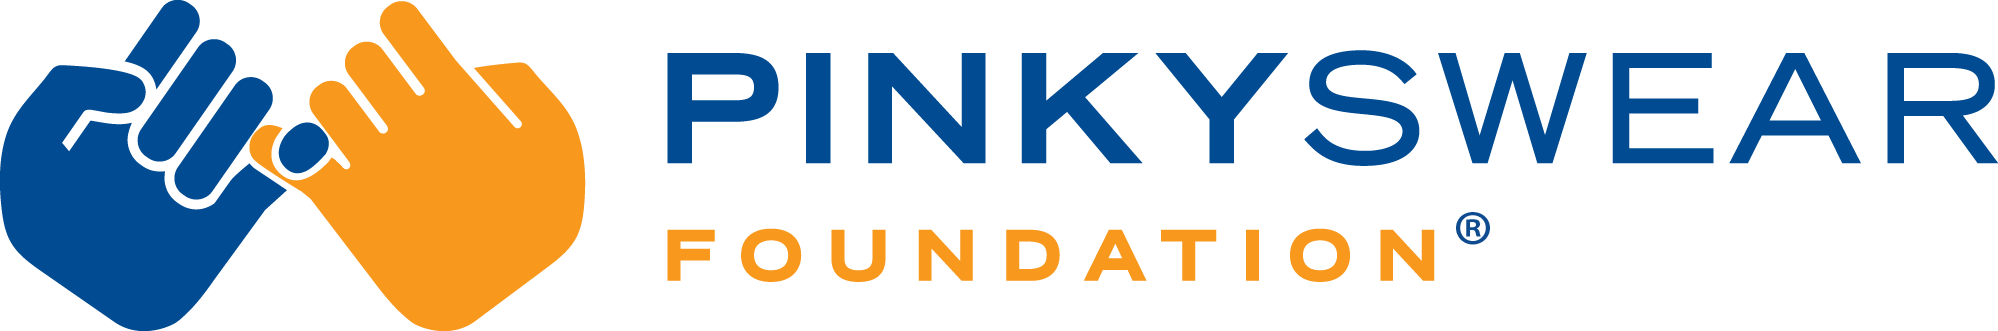 Pinky Swear Foundation Logo with Registered Trademark